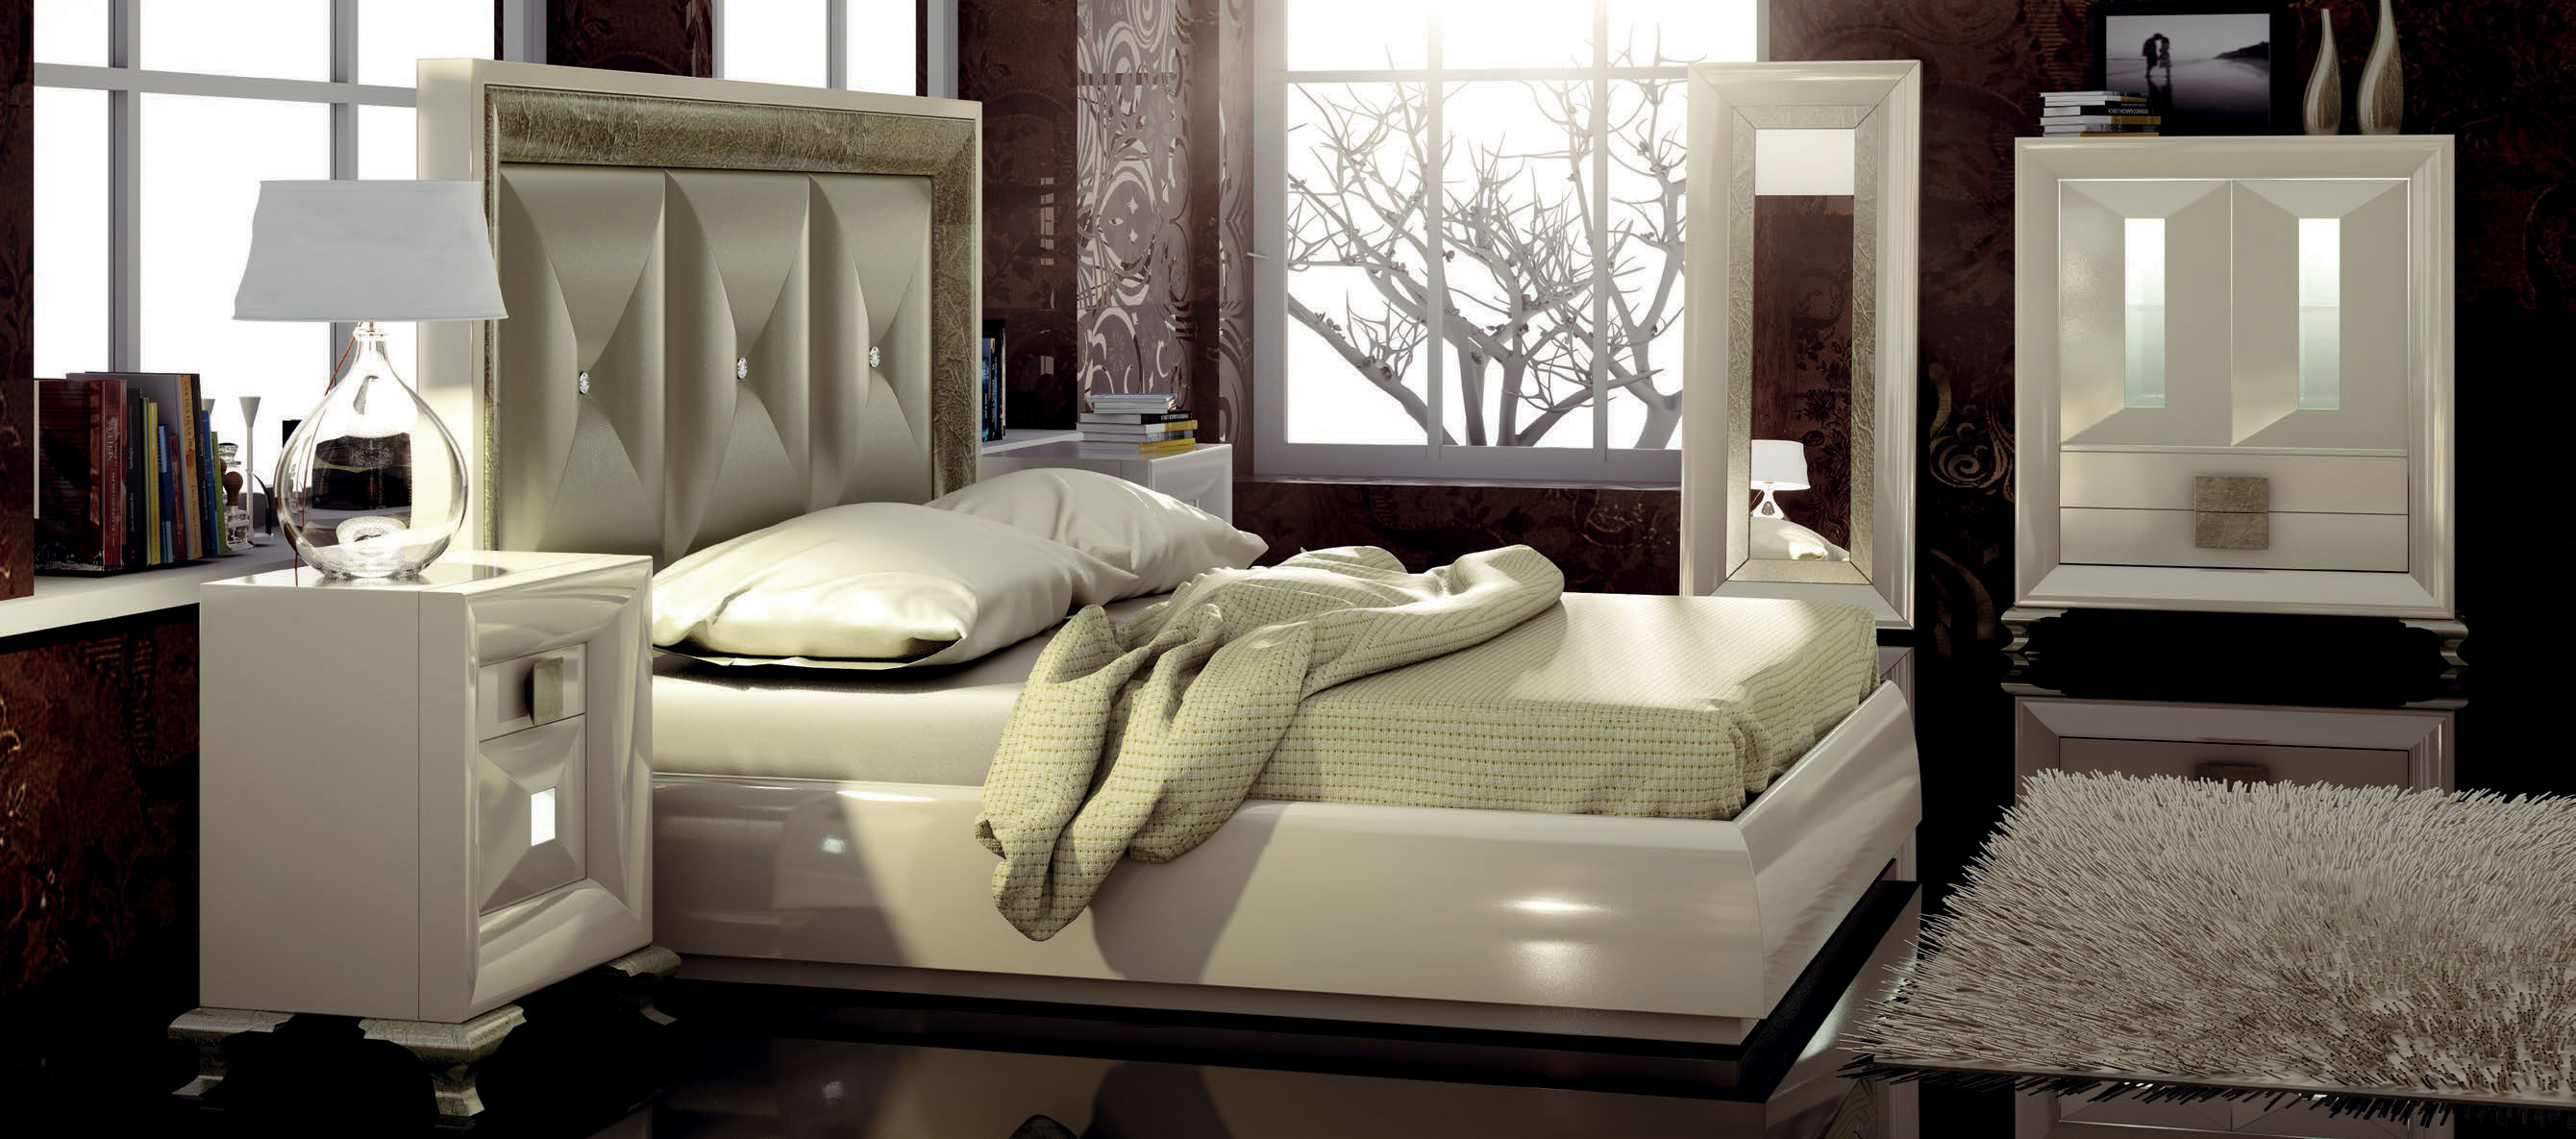 Brands Franco Furniture Bedrooms vol1, Spain DOR 145